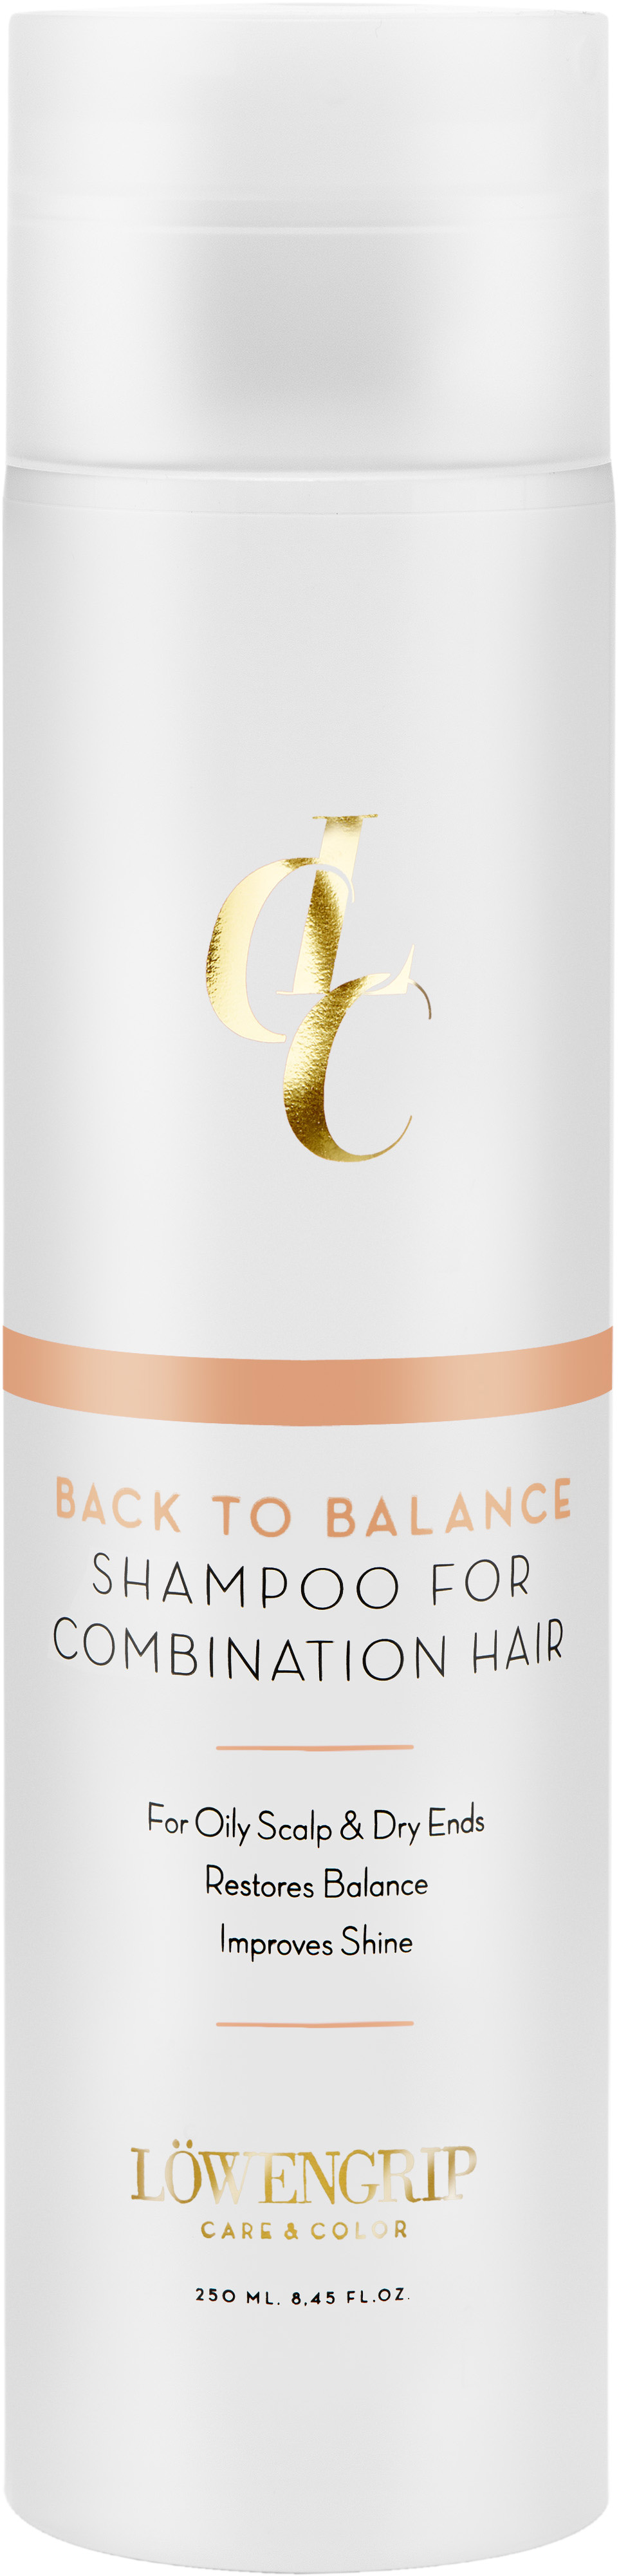 Löwengrip Care & Color Back To Balance Shampoo 250ml